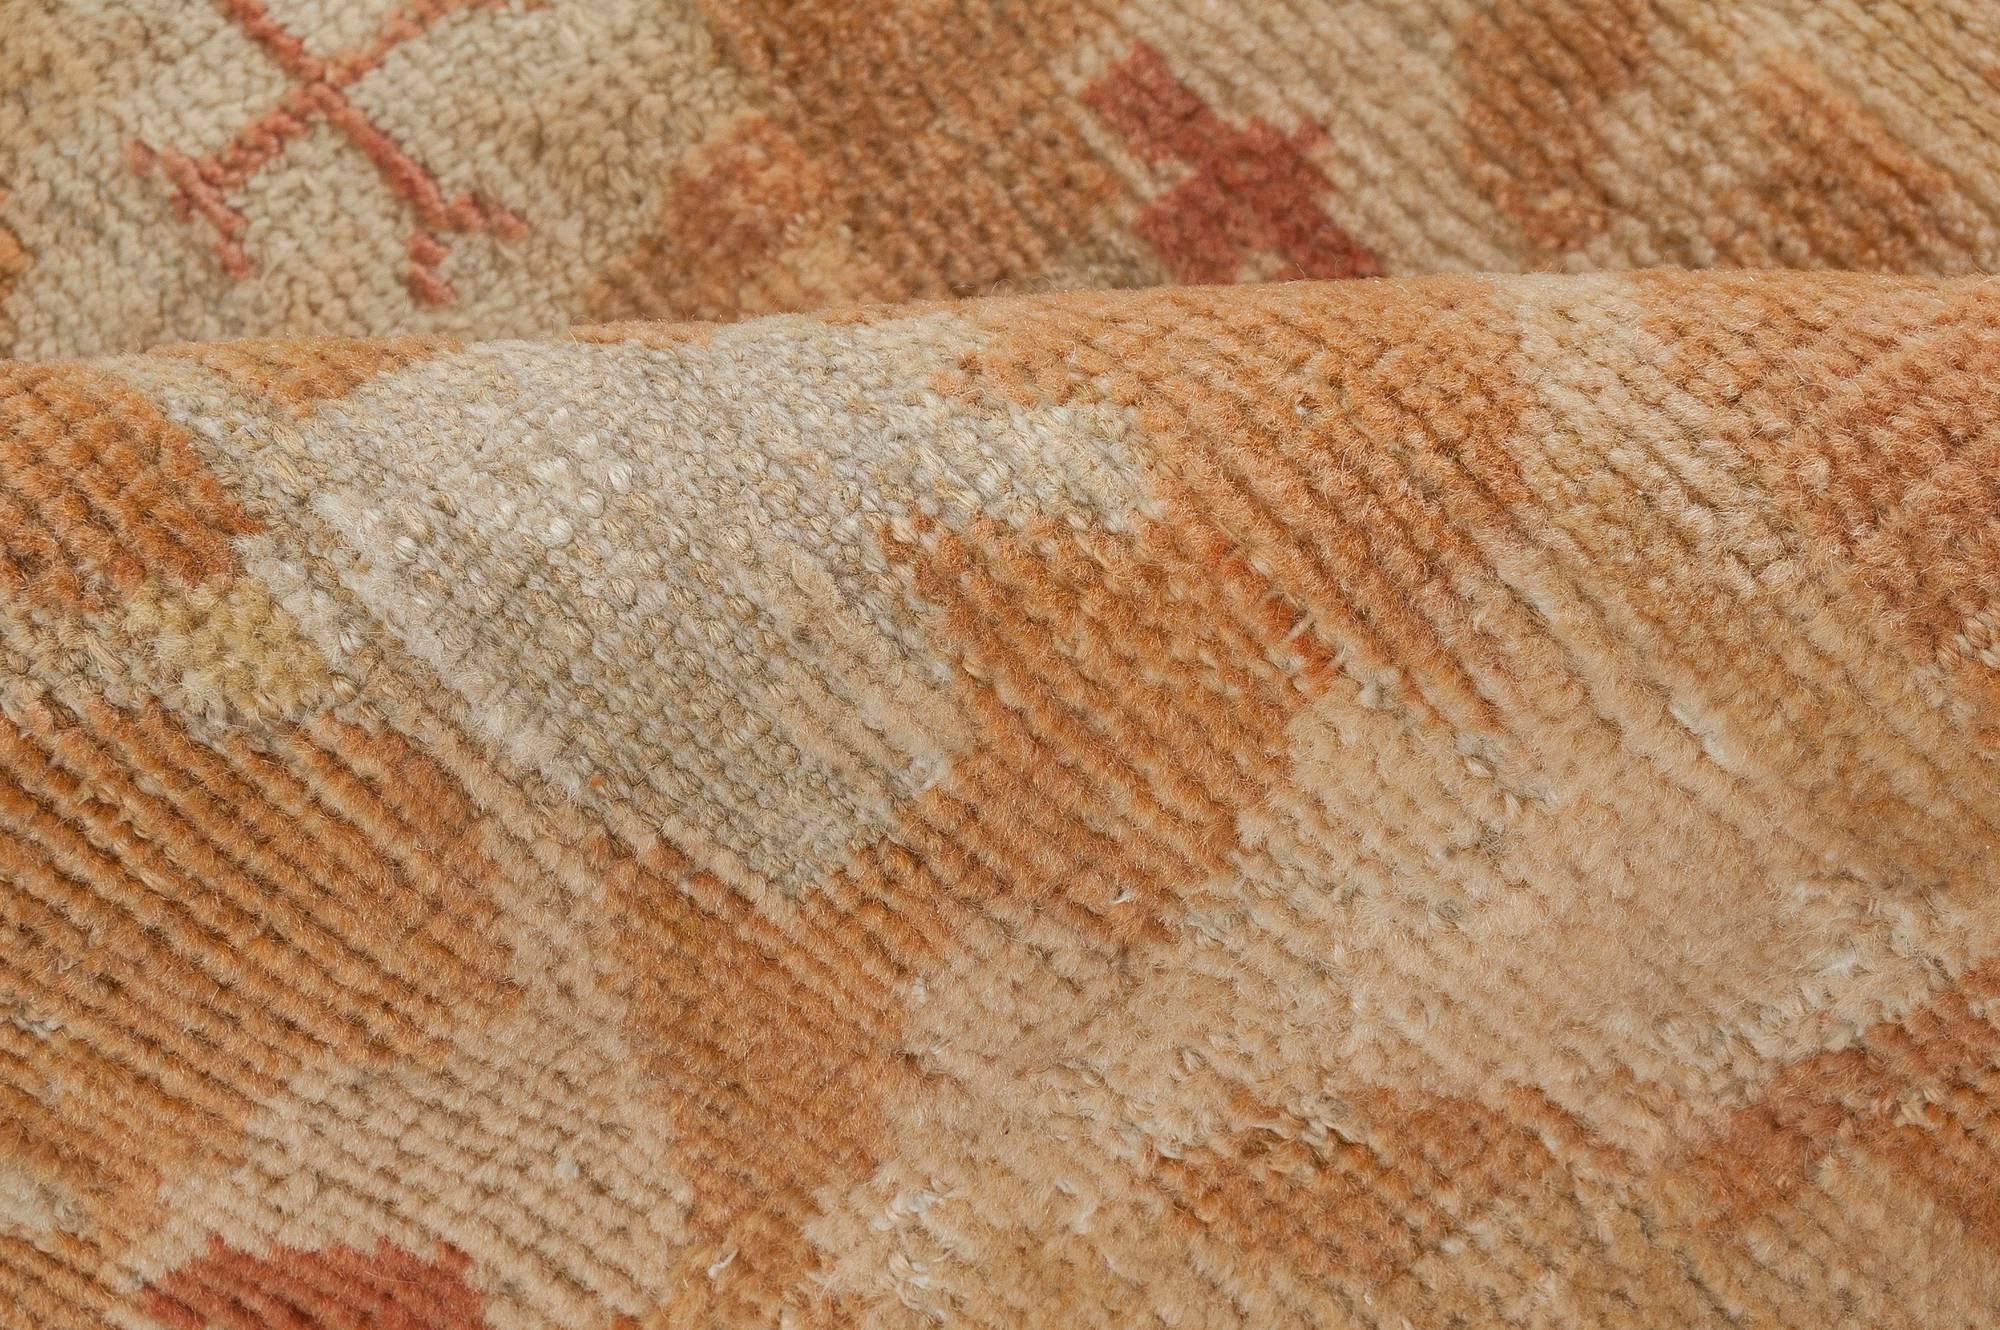 Early 20th century Indian Amritsar orange, brown handmade wool rug
Size: 9'0